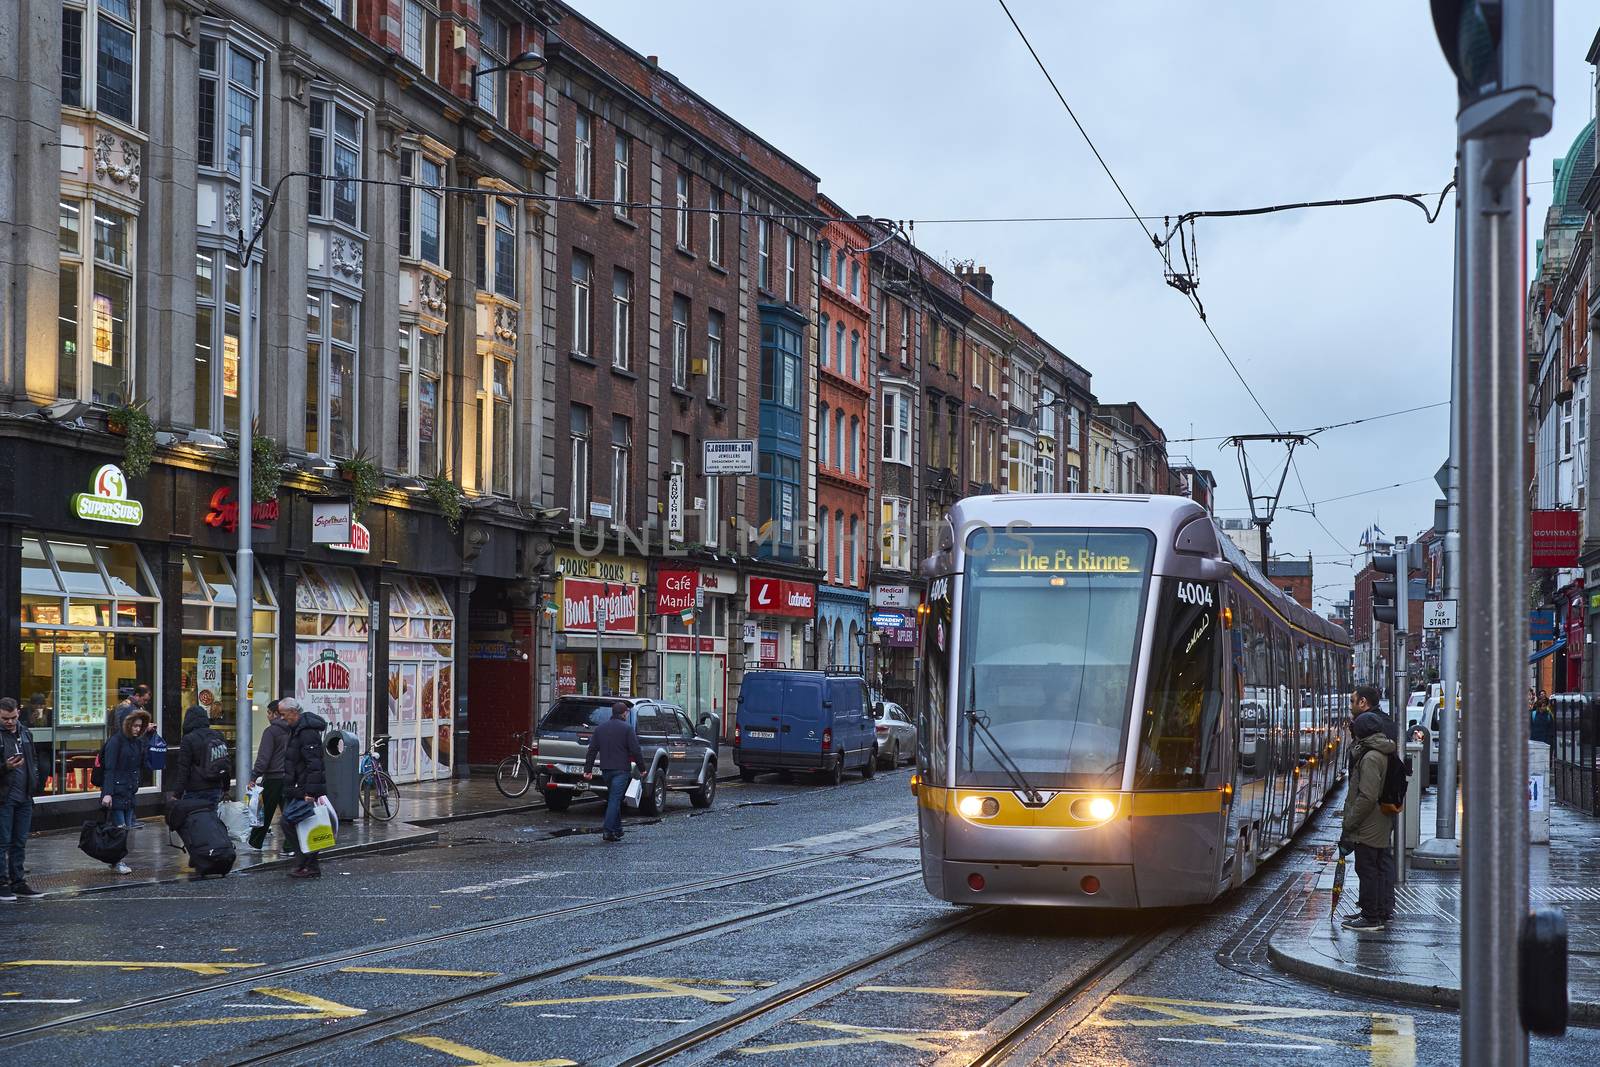 DUBLIN, IRELAND - JANUARY 05: The Luas, Dublin's tram system train, crossing pedestrian area in rainy day. January 05, 2016 in Dublin